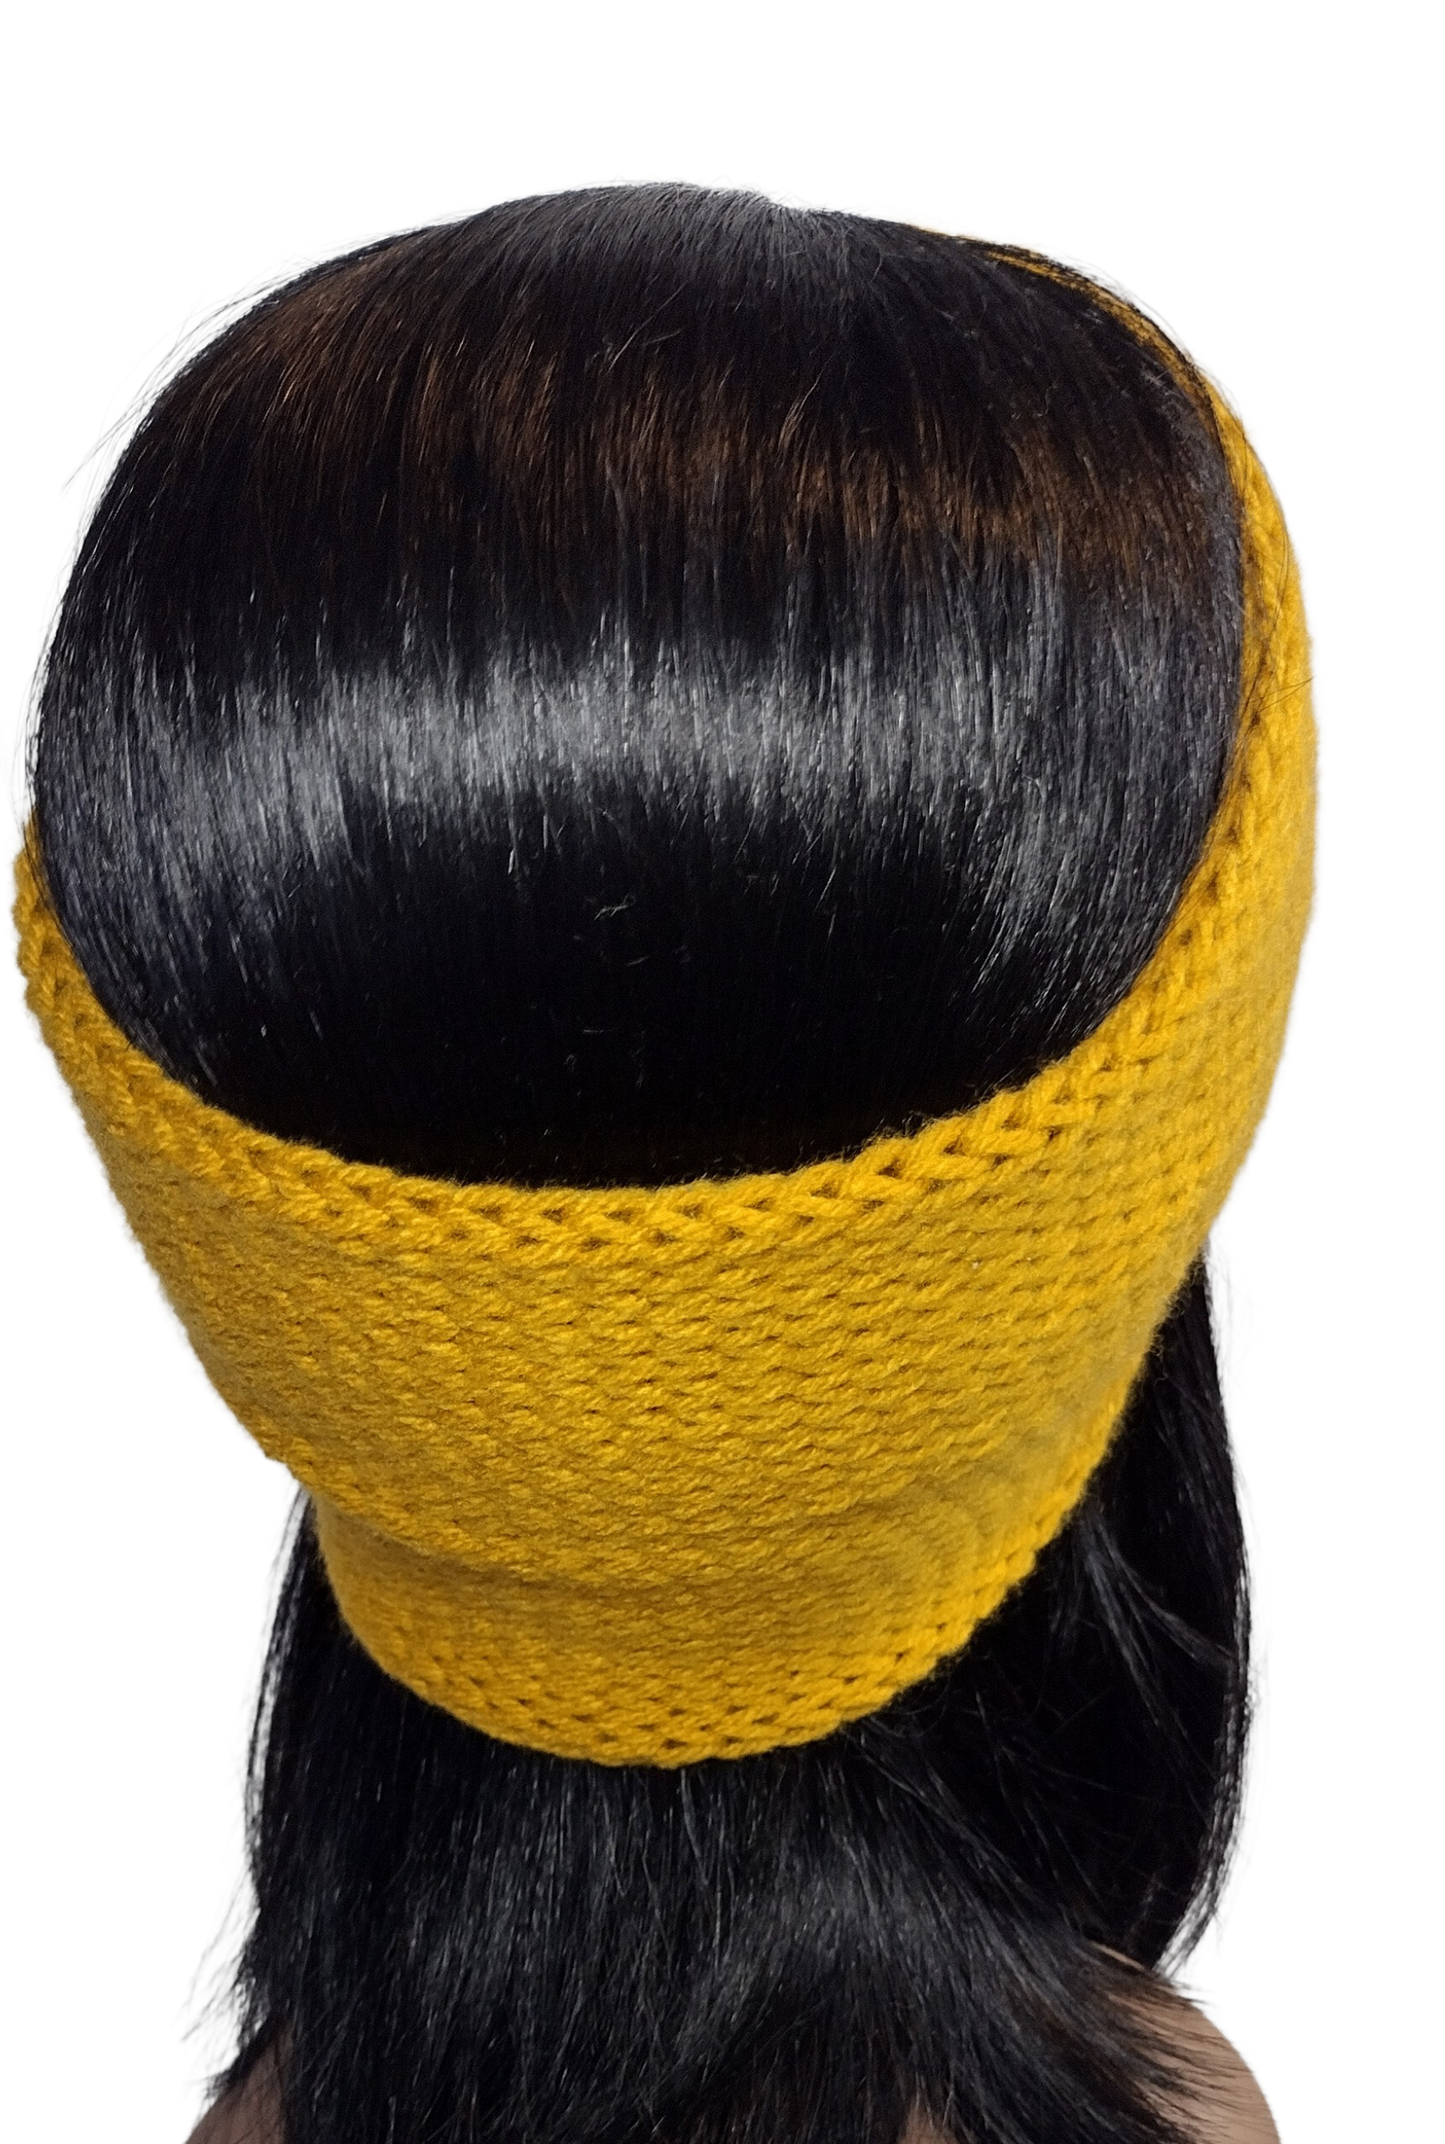 Blk Lotus Co Mustard Yellow Twist Knit Headband: Style and Warmth Unite